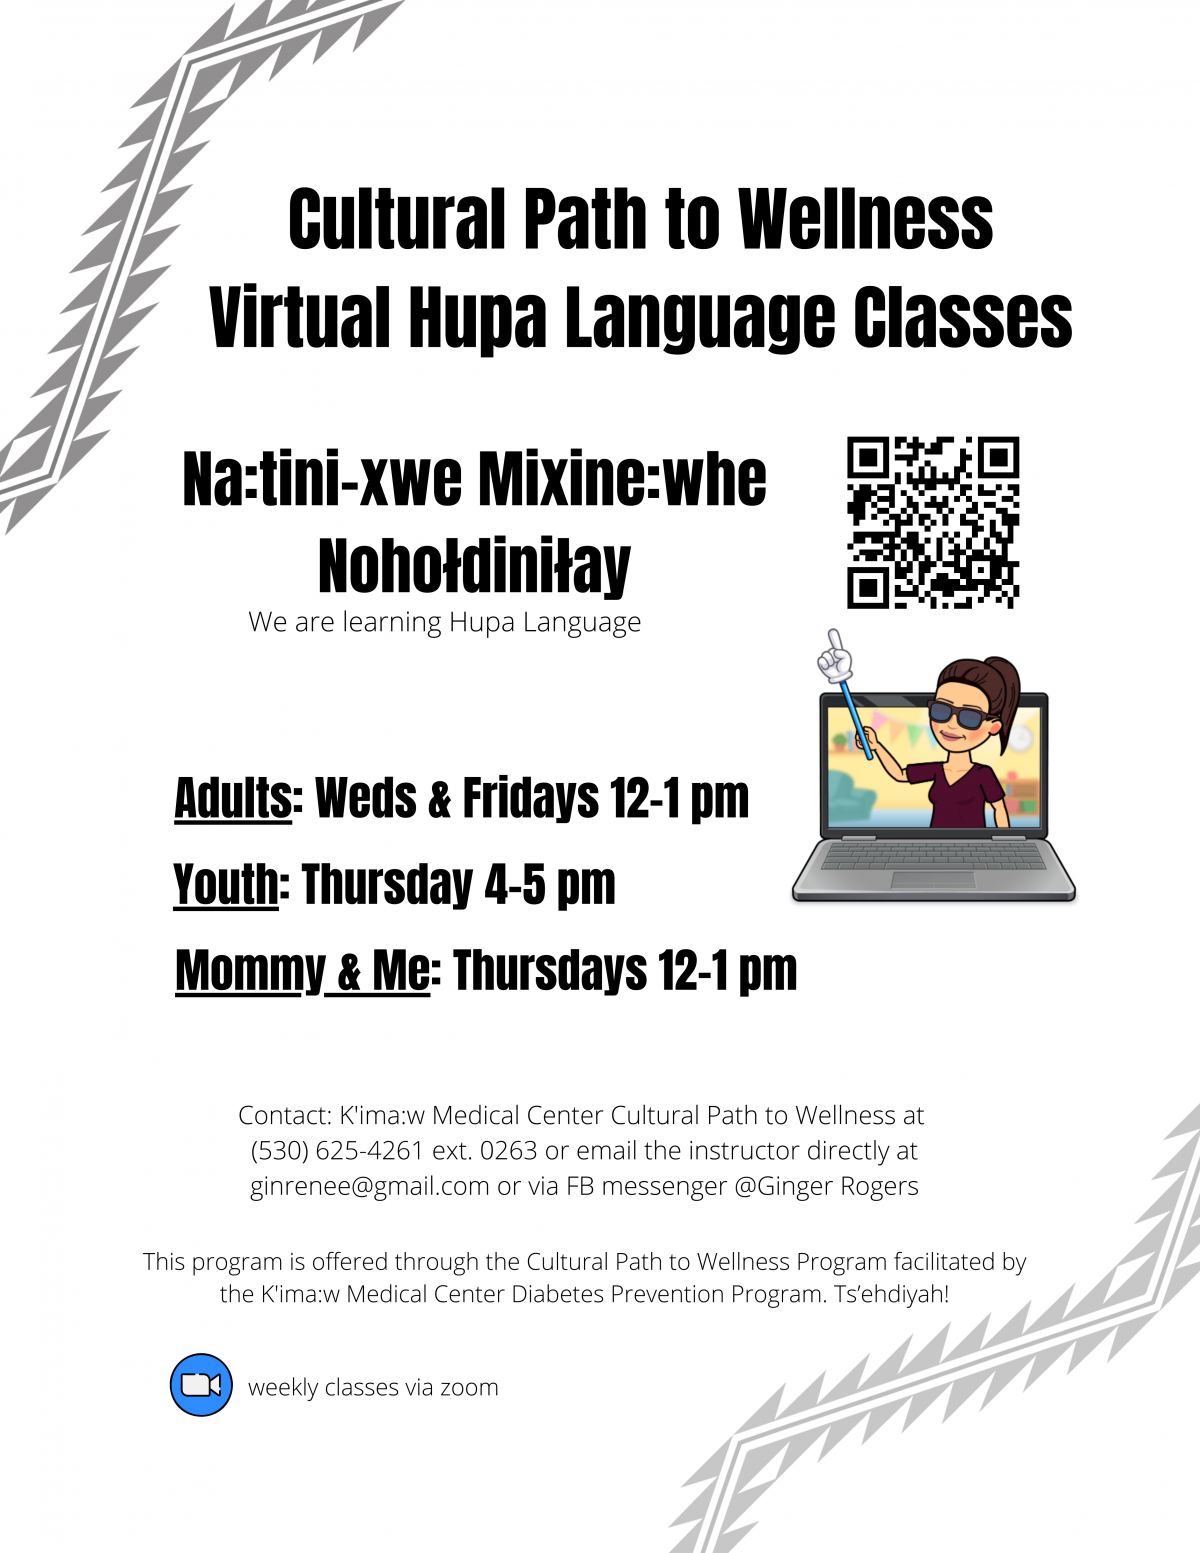 Cultural Path to Wellness Virtual Hupa Language Classes